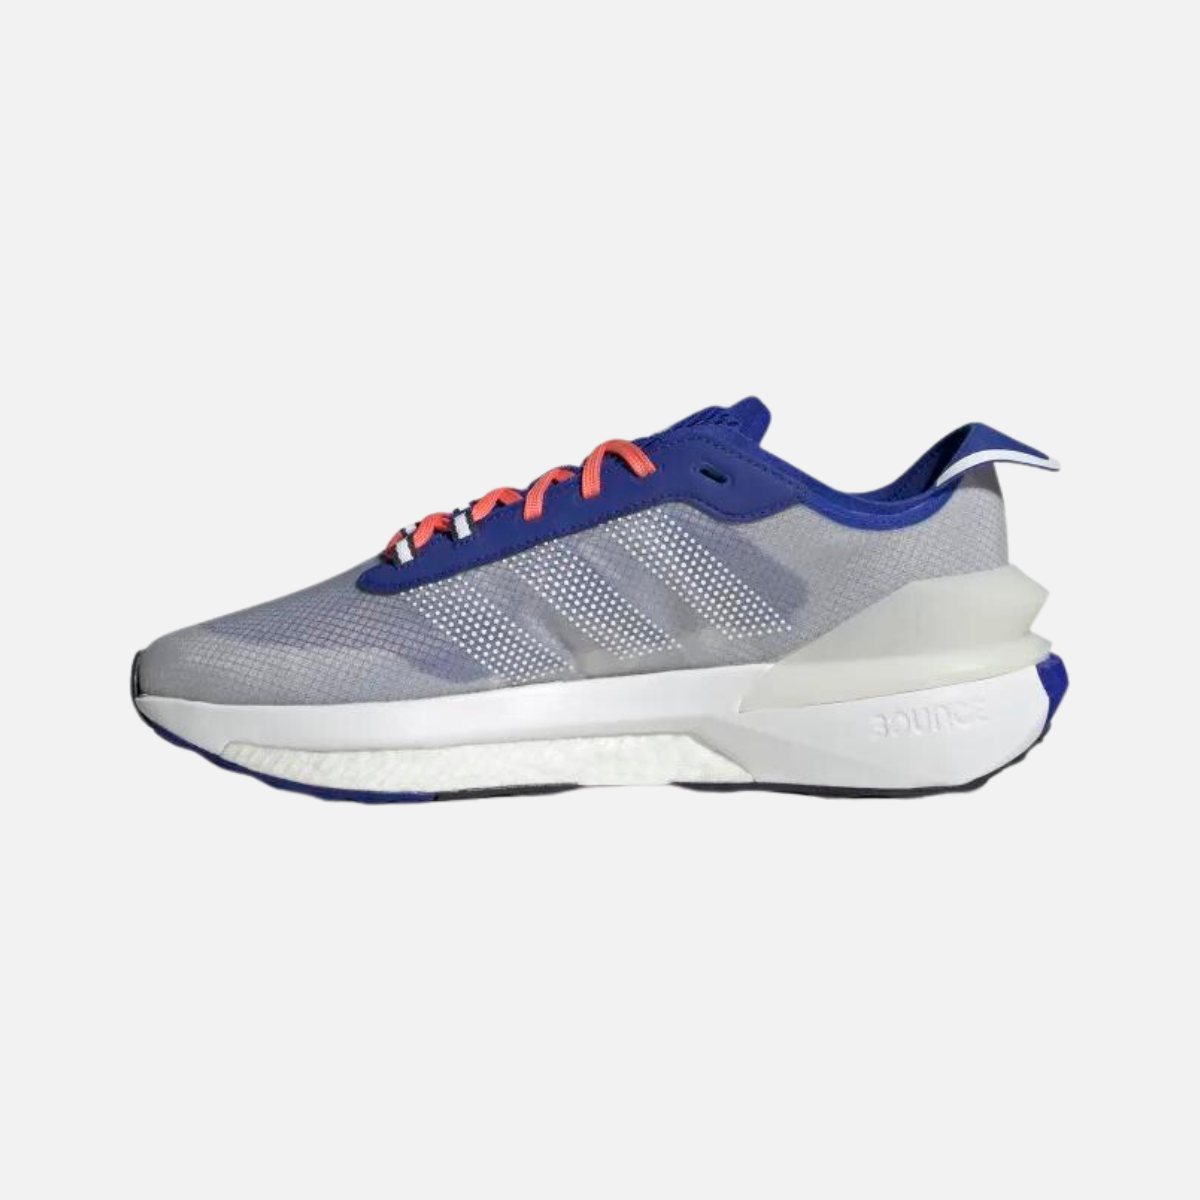 Adidas Avryn Unisex Walking Shoes -Lucid Blue/Lucid Blue/Coral Fusion